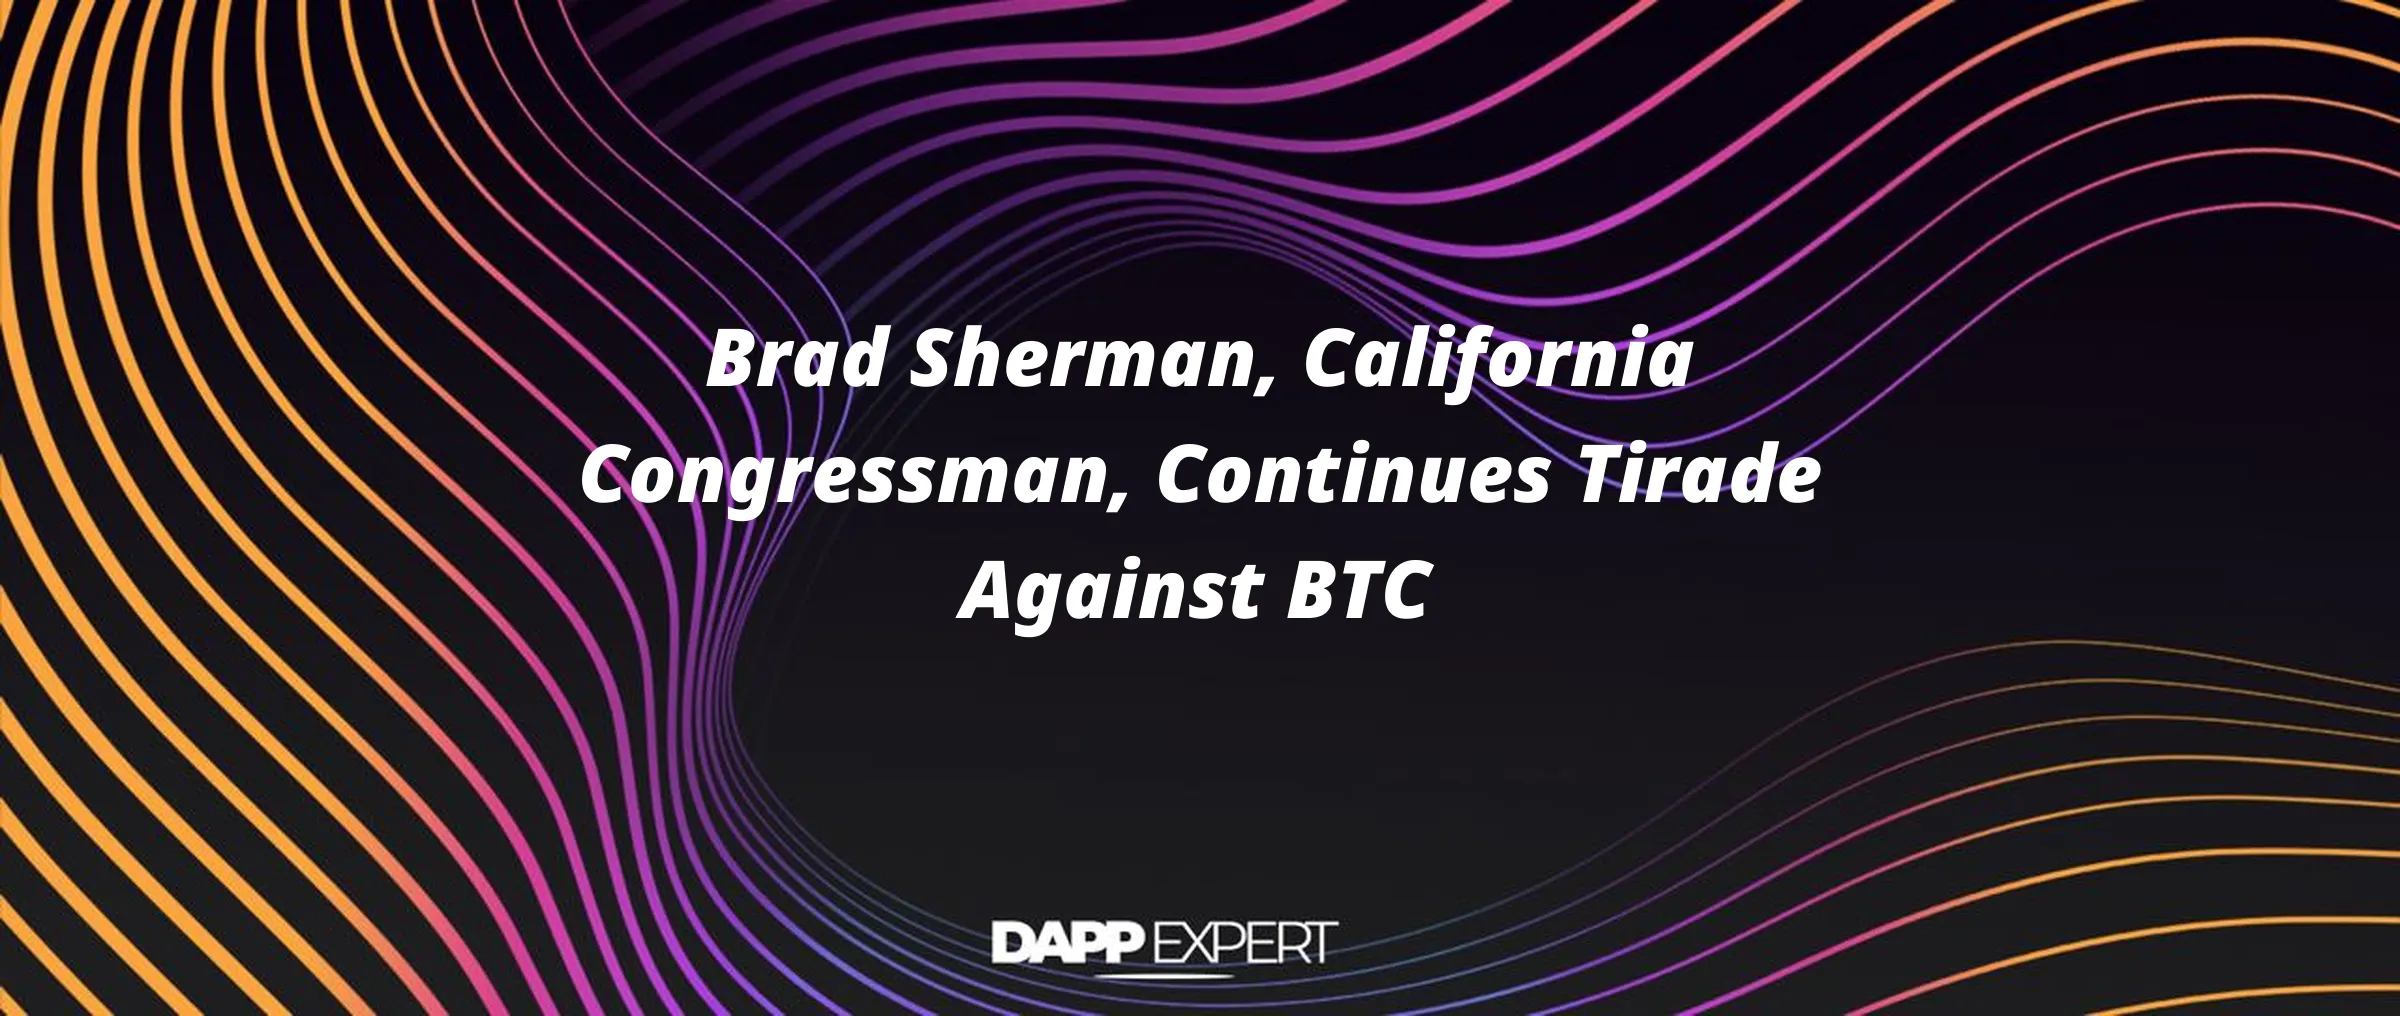 Brad Sherman, California Congressman, Continues Tirade Against BTC